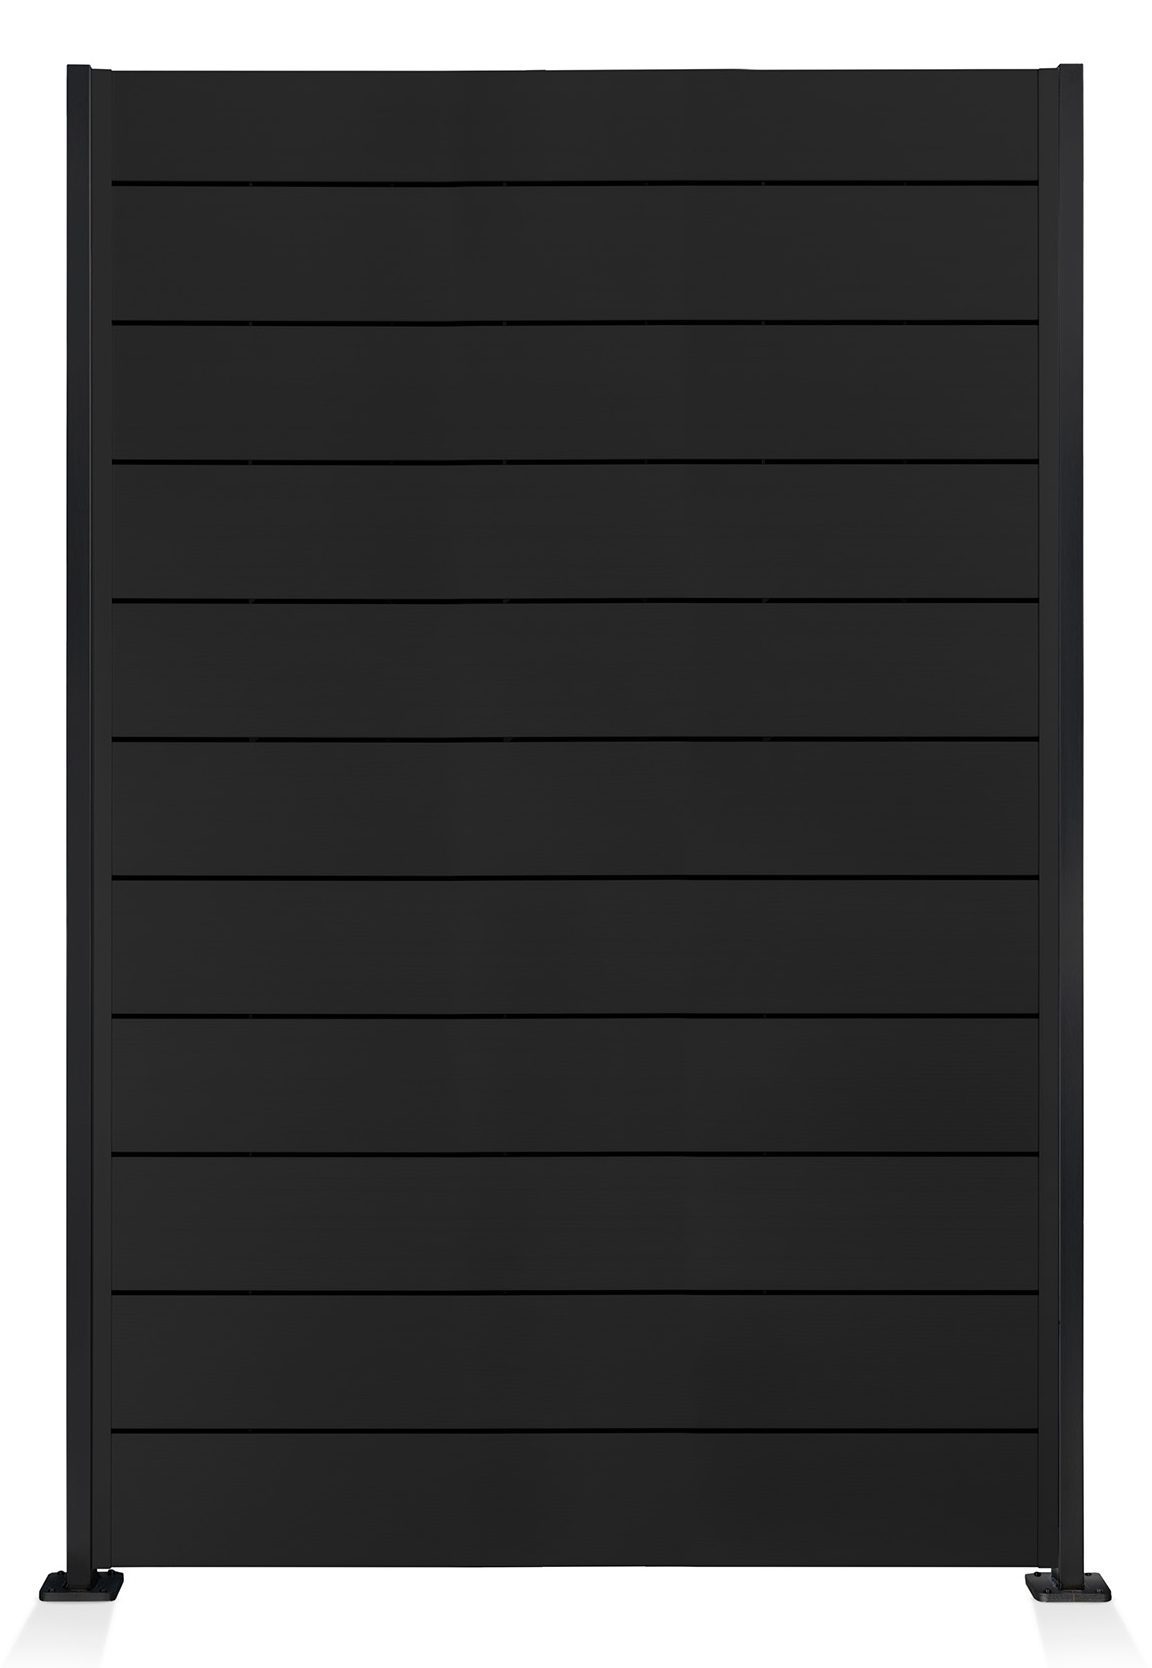 ausschnitt_0008_element-solar-sichtschutz-pv-photovoltaik-zaun-collection-hutter-panel-lamellen-schwarz-pfosten-schwarz-.jpg